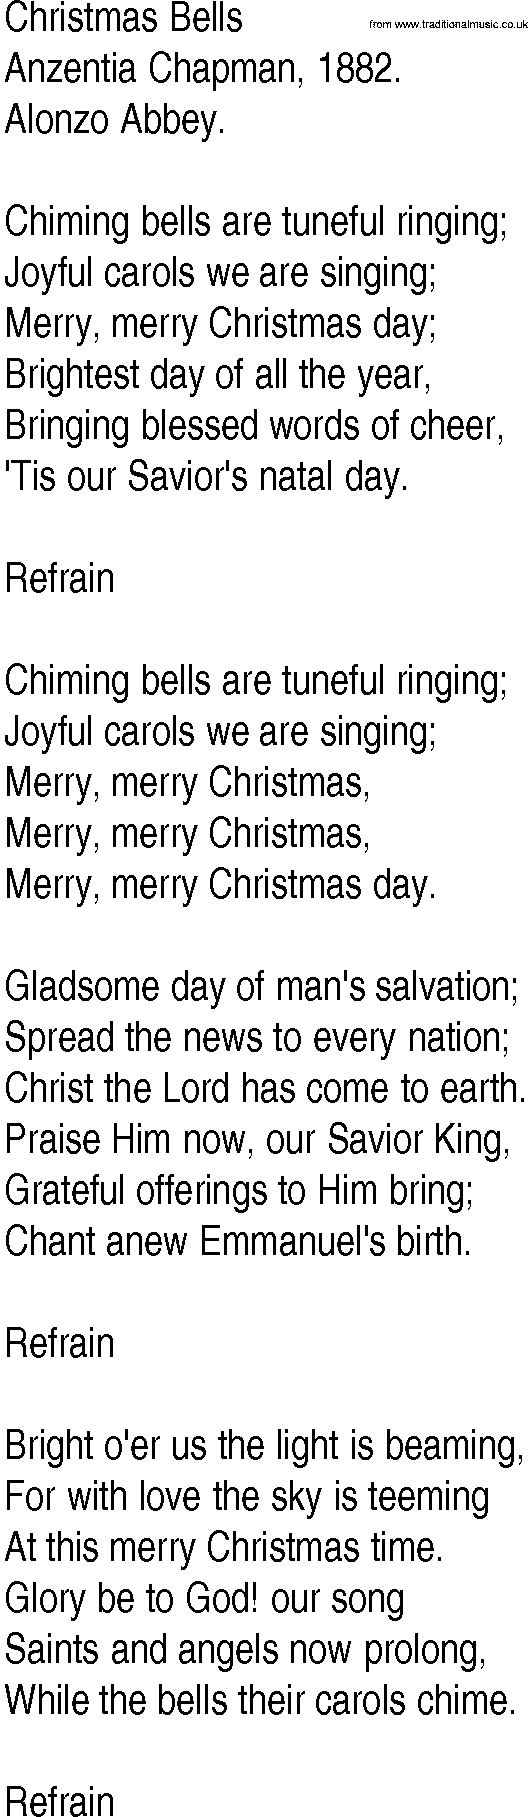 Hymn and Gospel Song: Christmas Bells by Anzentia Chapman lyrics